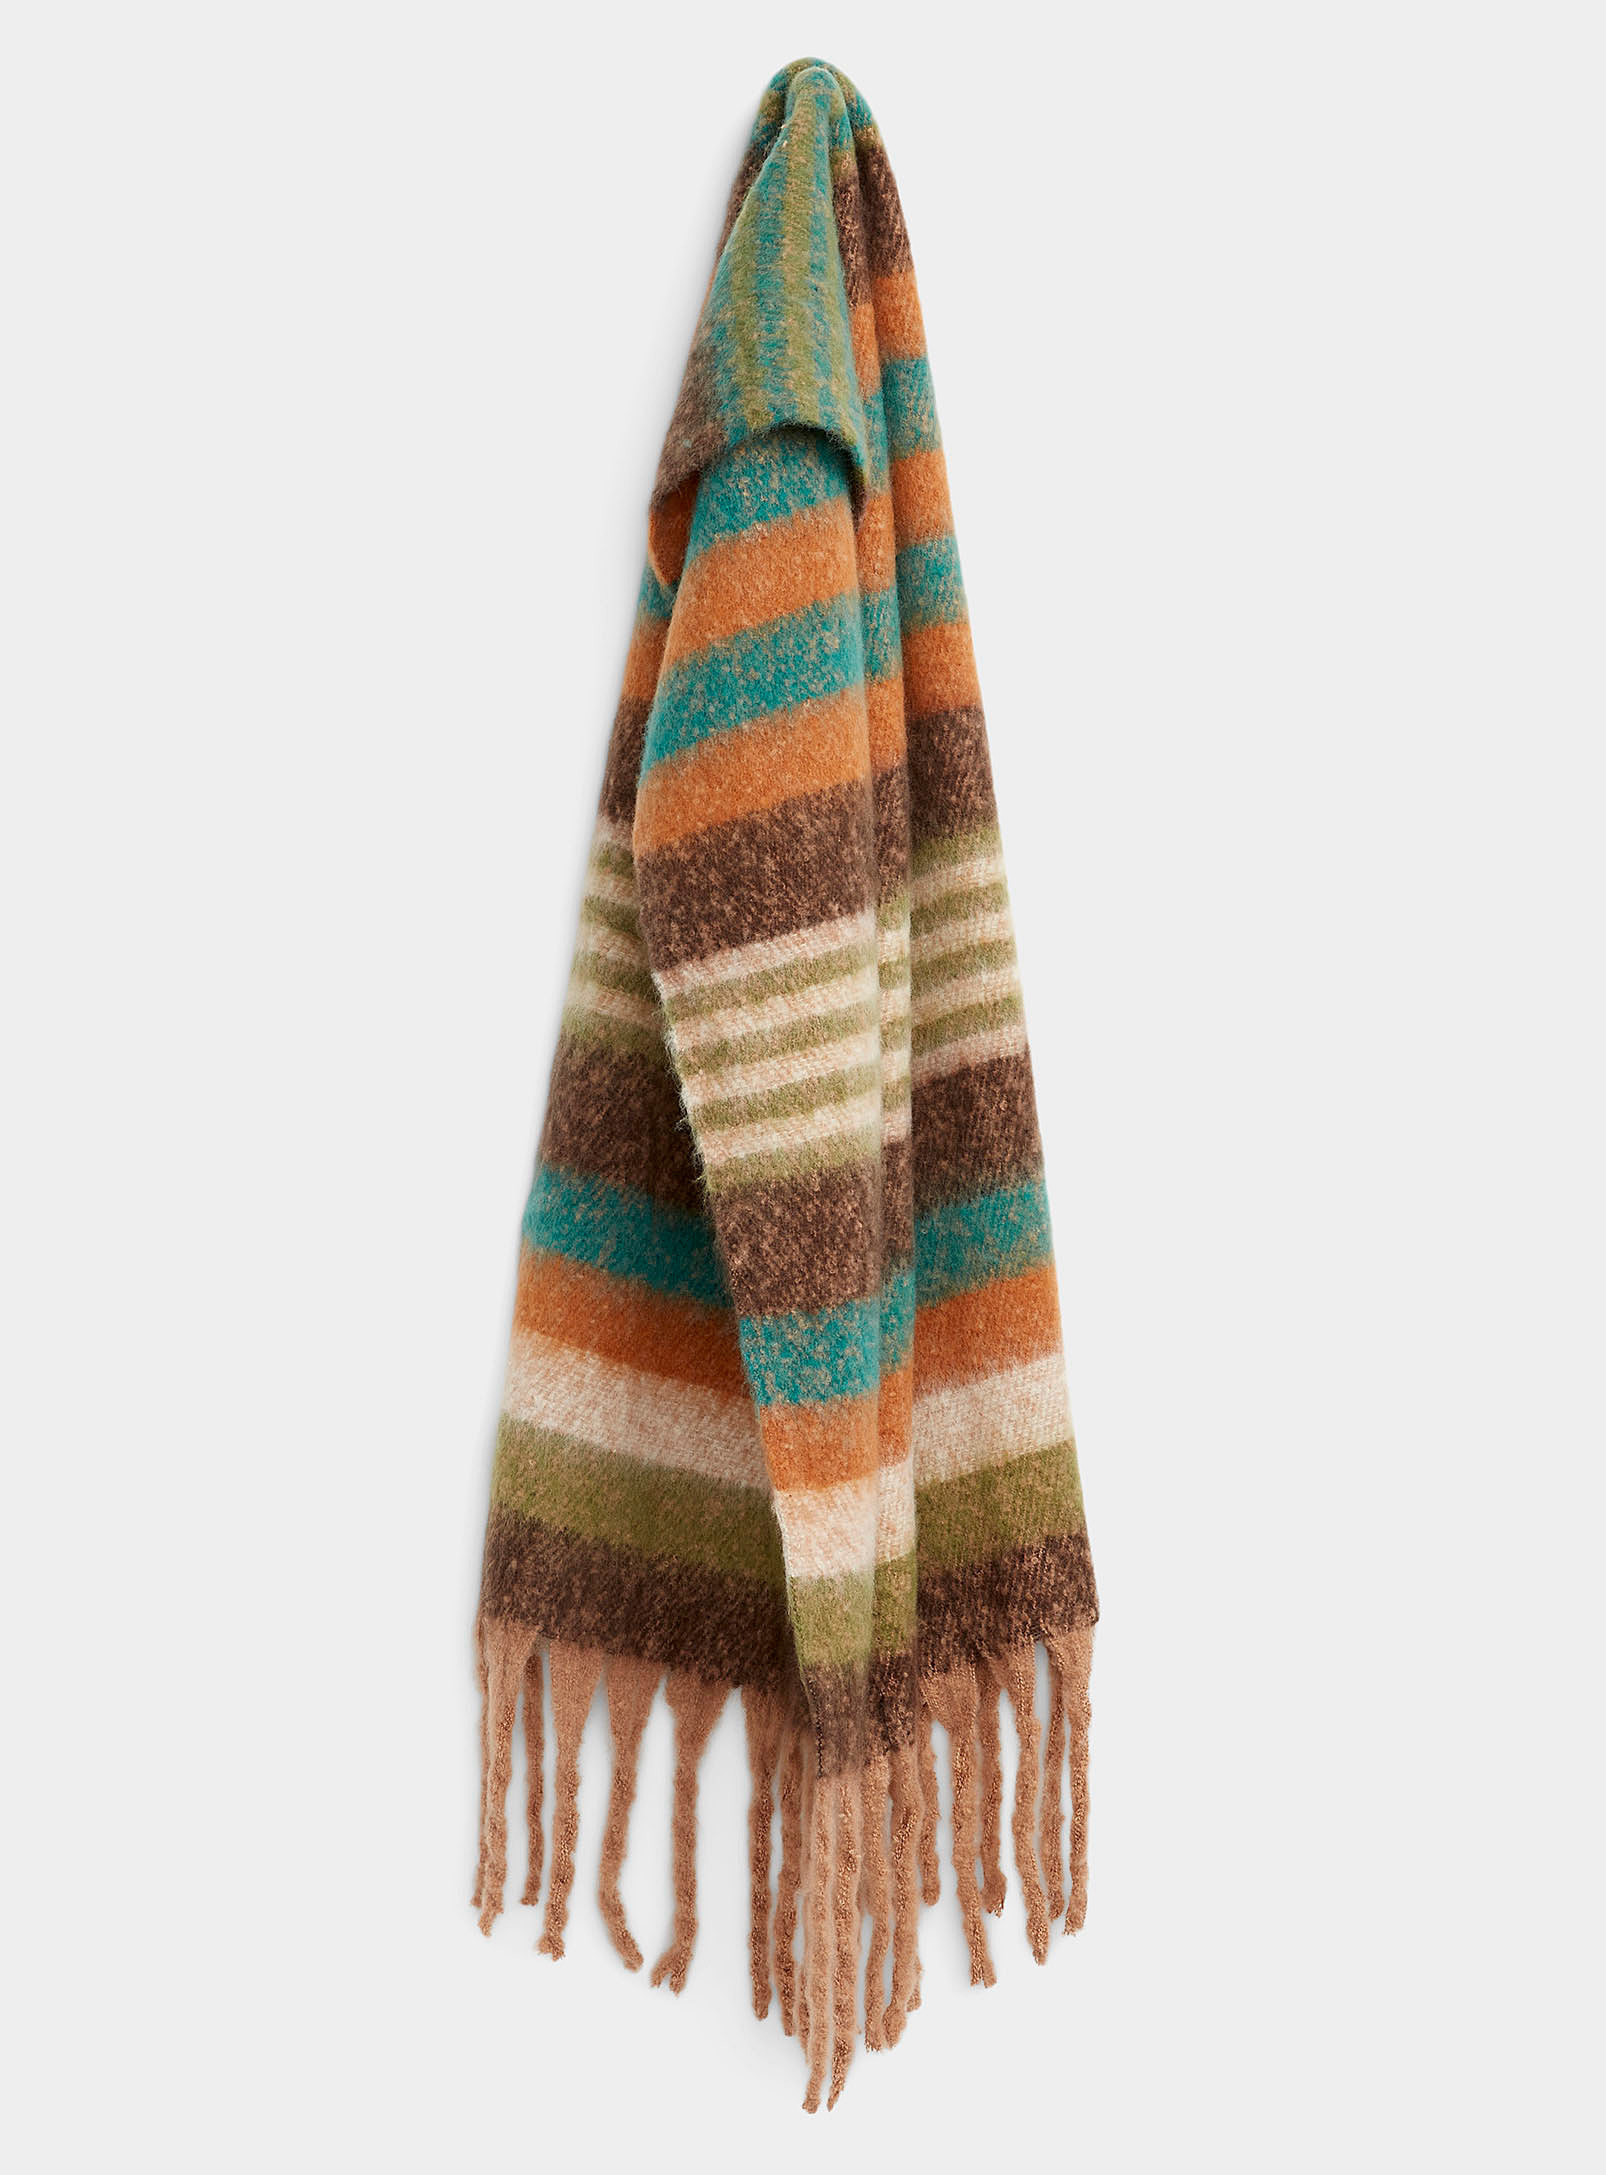 a knit scarf on a blank background